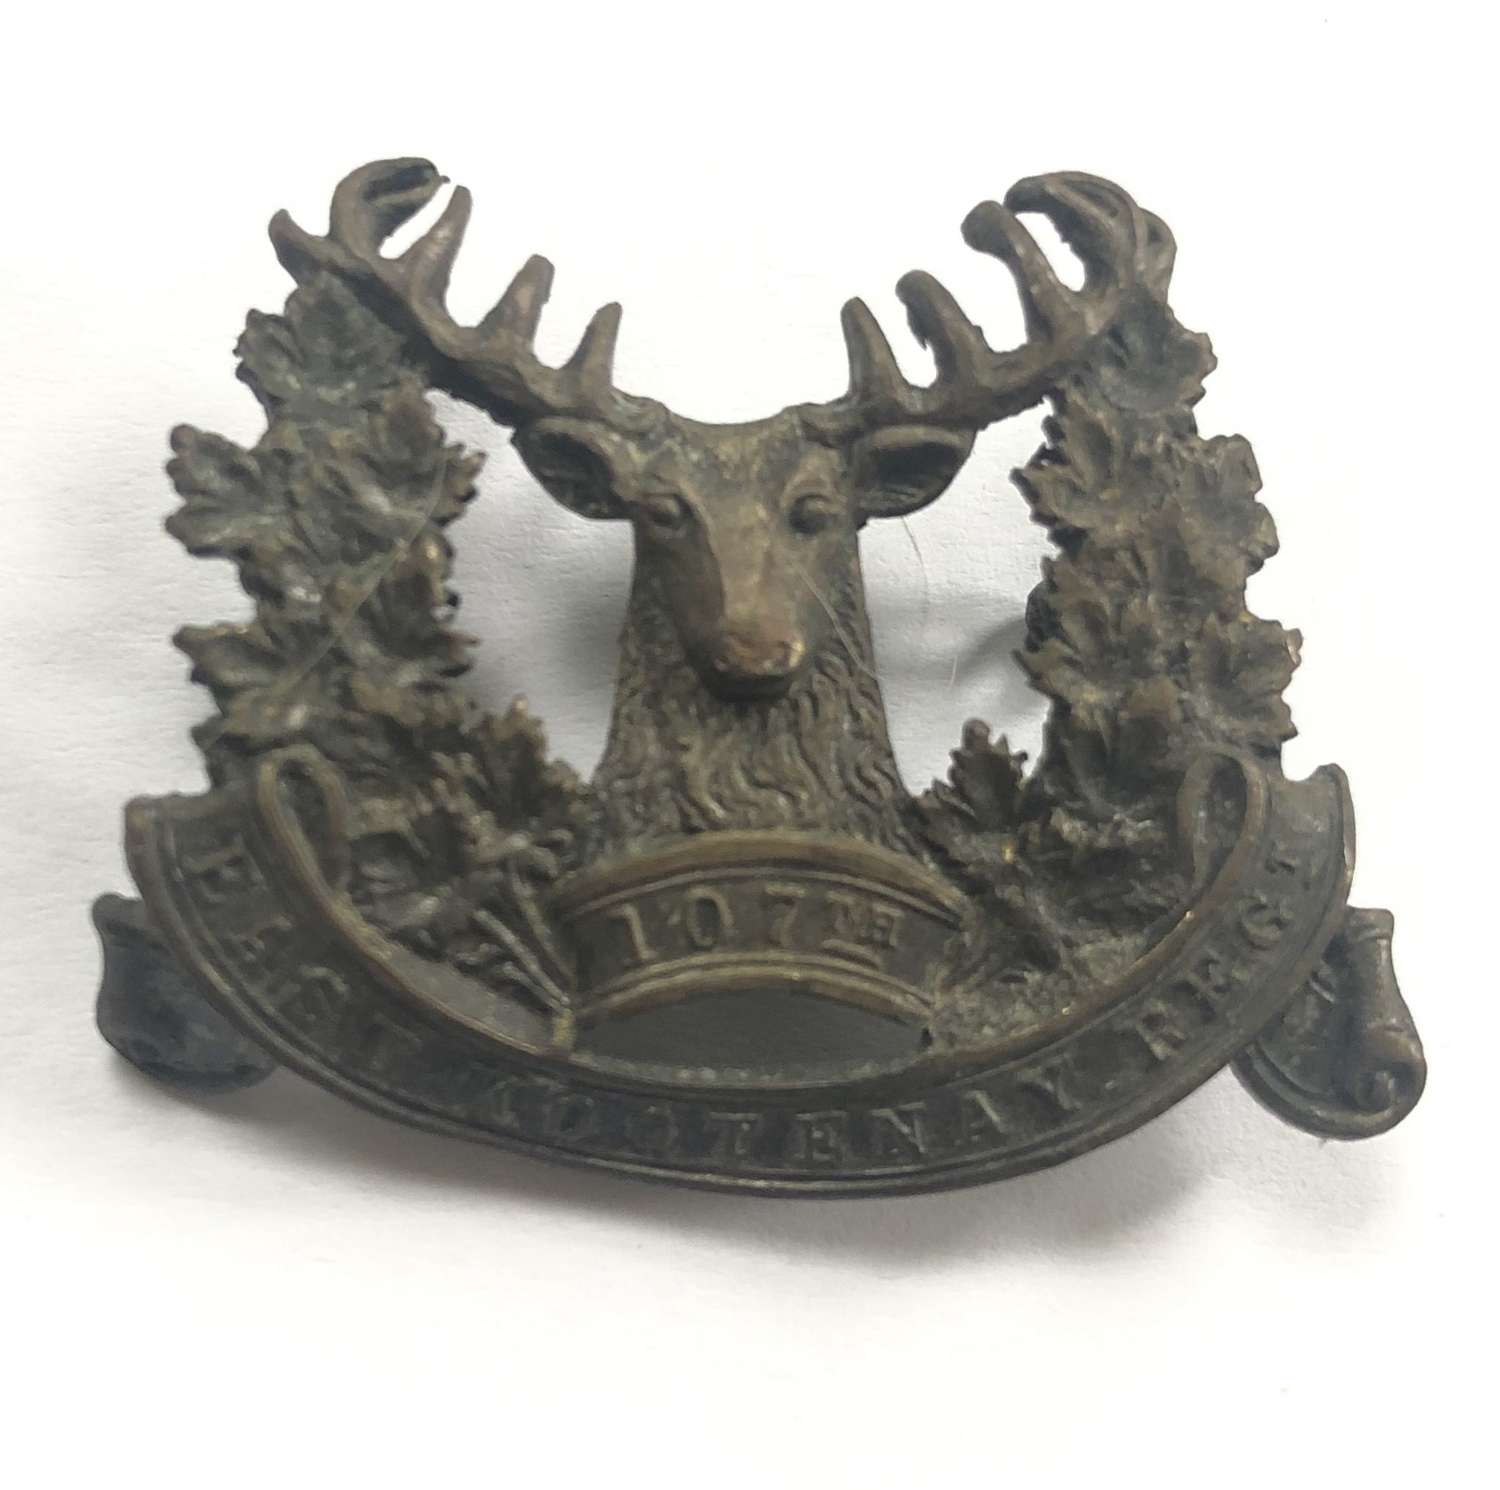 Canada. 107th East Kootenay Regiment pre WW1 cap badge